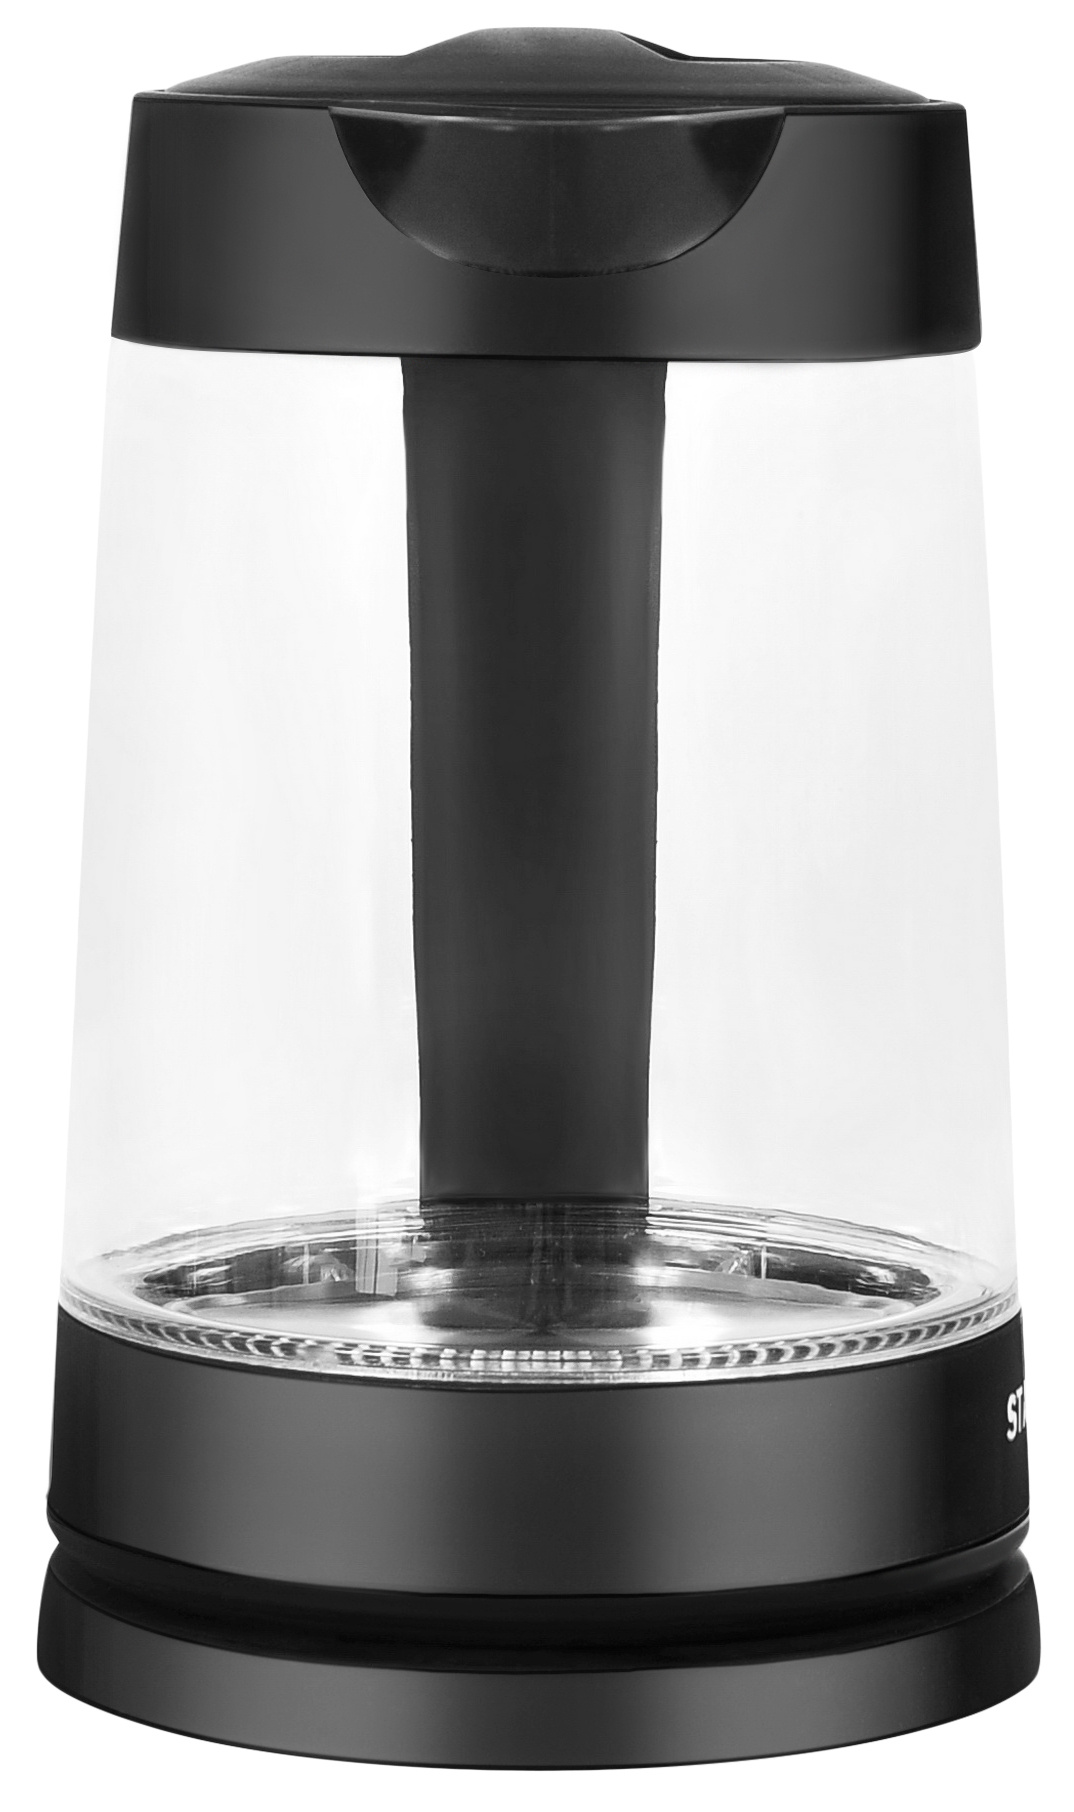 Чайник электрический Starwind SKG2080 черный, стекло от магазина Старвинд